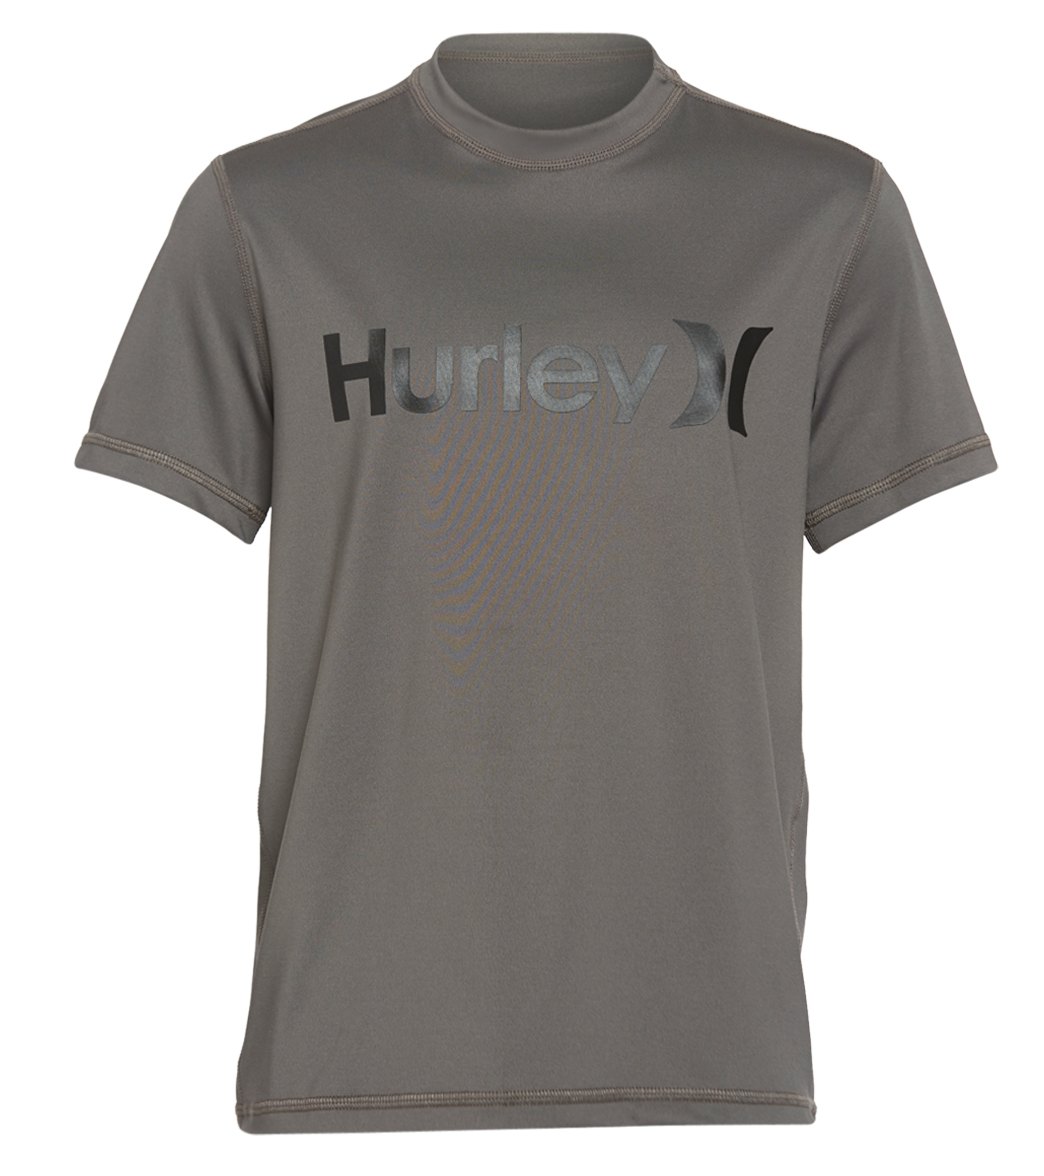 Hurley Unisex Kids One/&only Surf Shirt L//S Long Sleeve Lycra//Rash